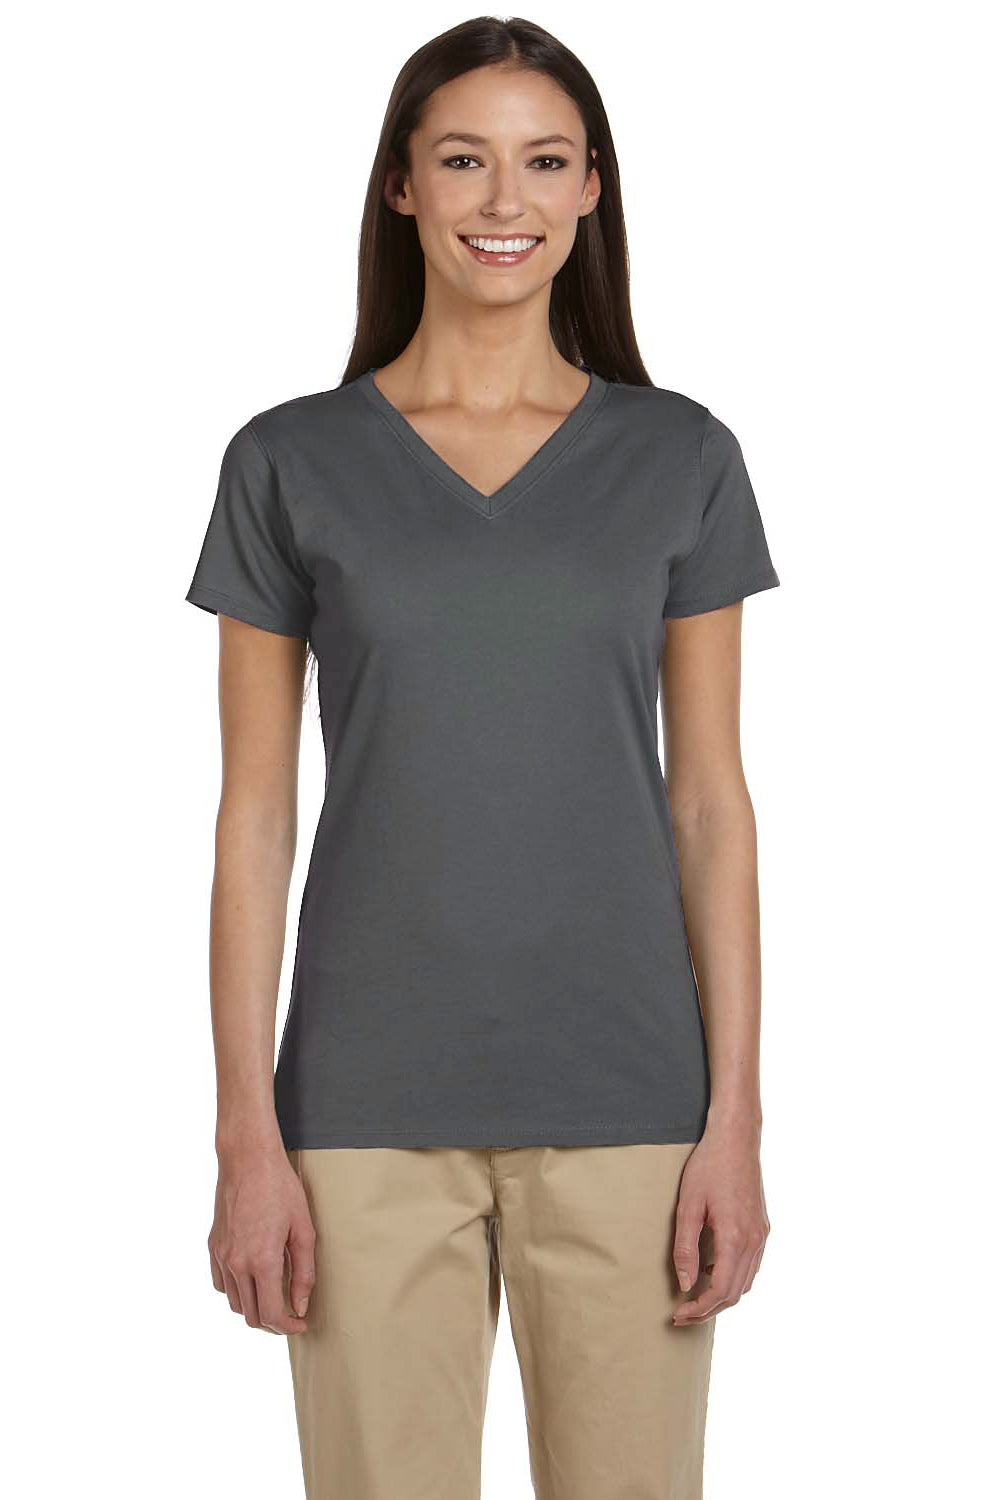 Econscious EC3052 Womens Short Sleeve V-Neck T-Shirt Charcoal Grey Front